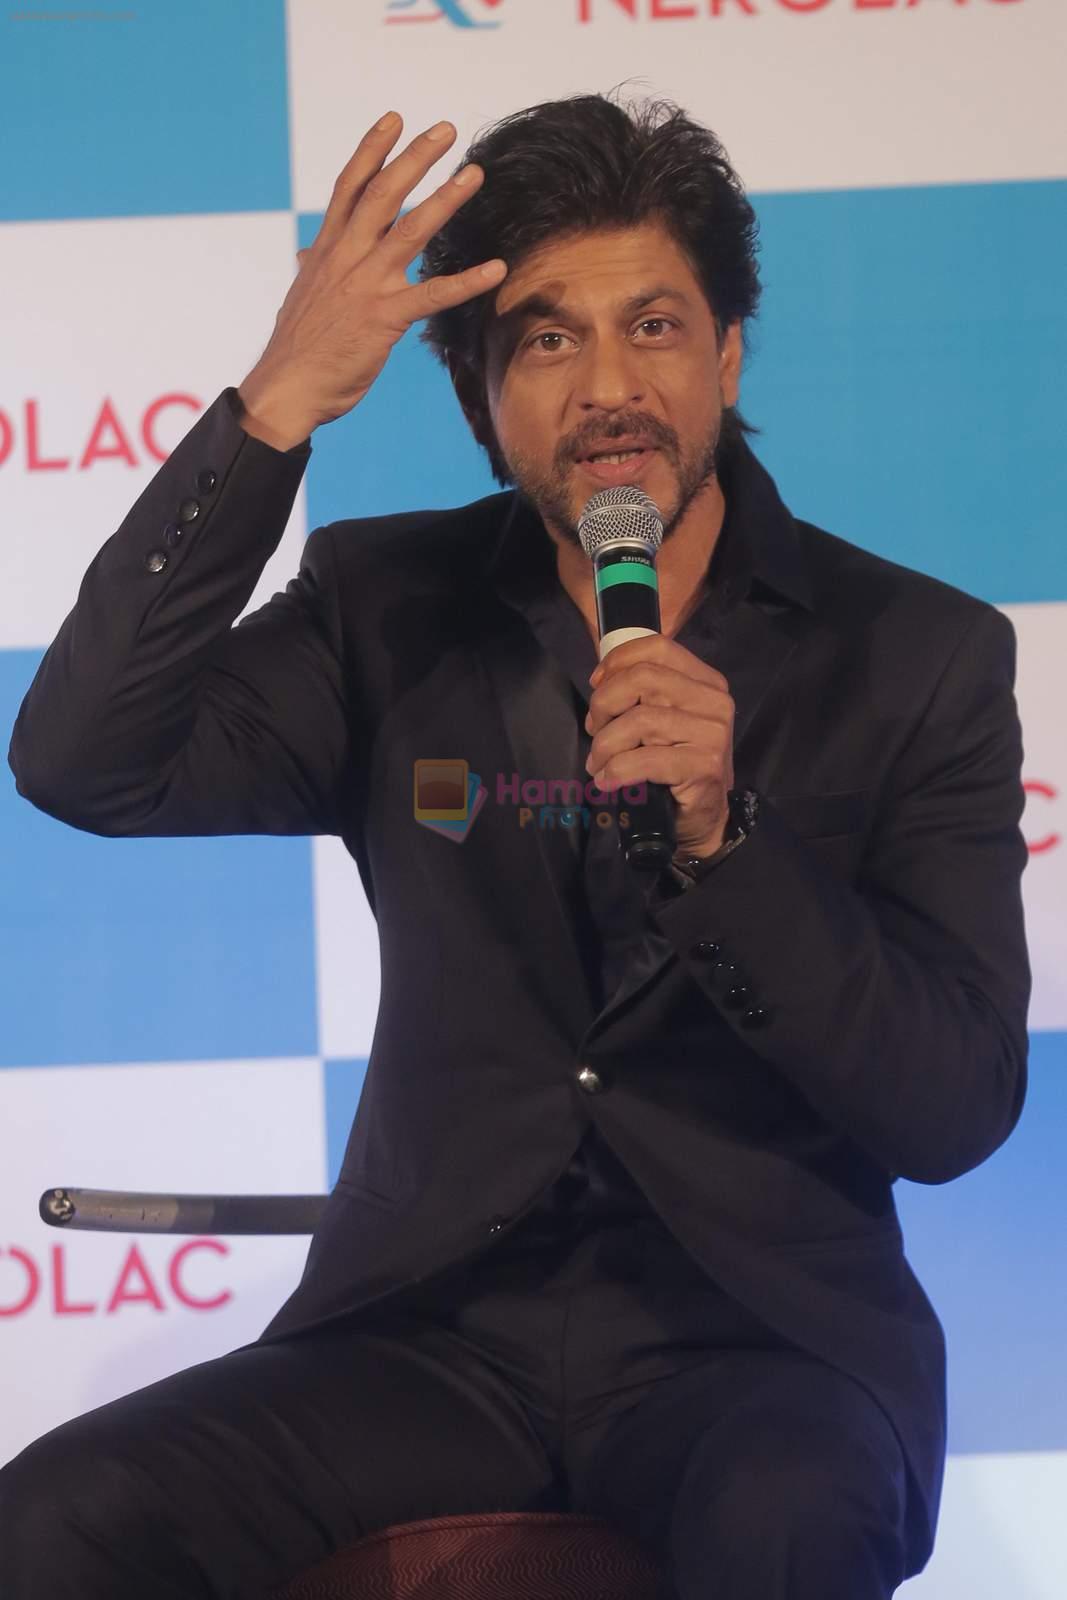 Shahrukh Khan at Nerolac Event in Kolkata on 11th Jan 2016